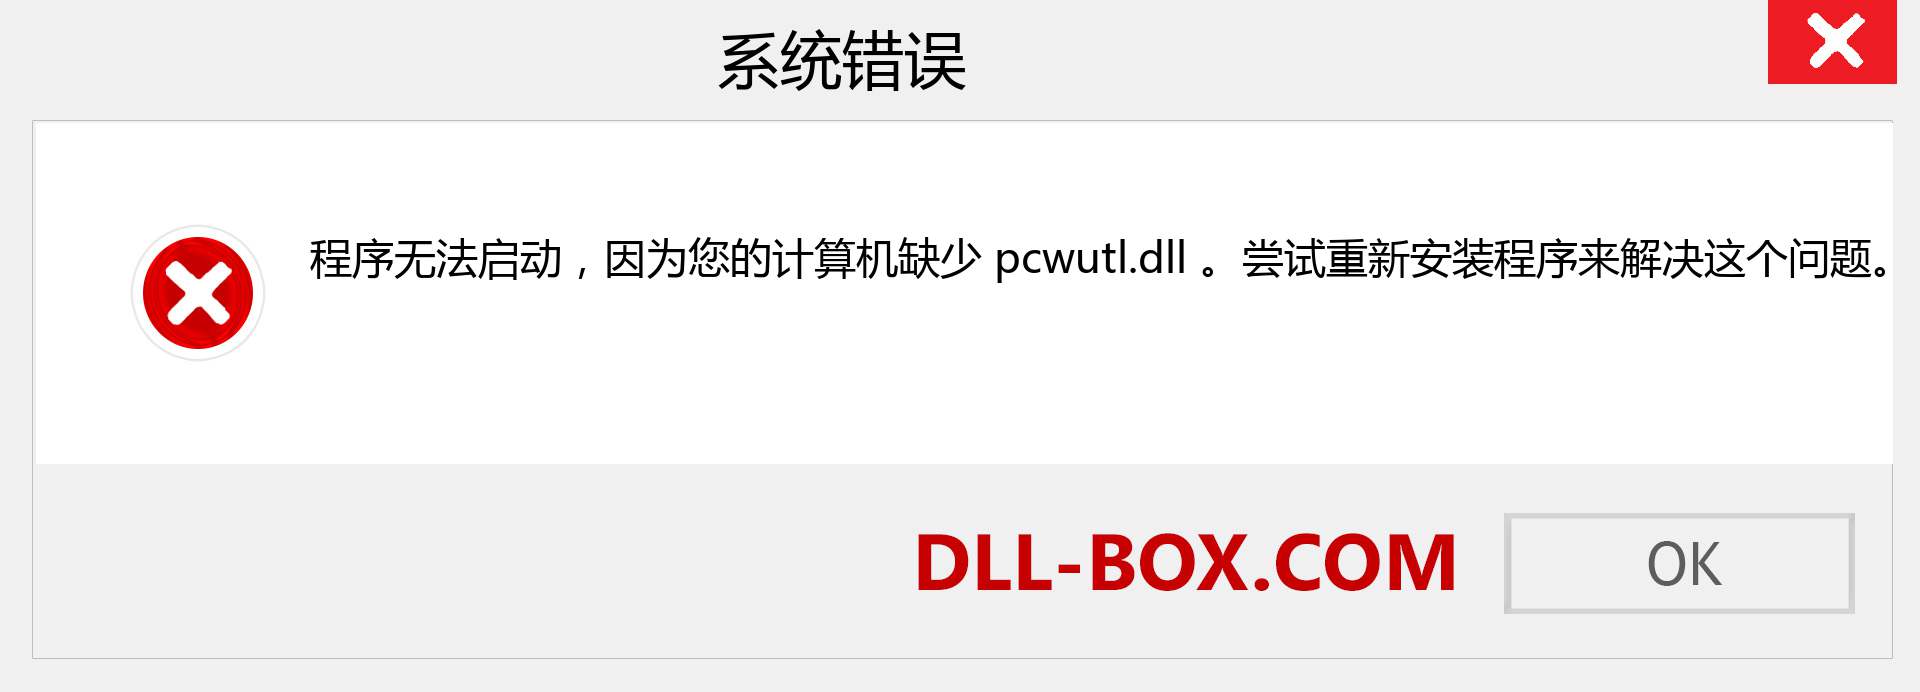 pcwutl.dll 文件丢失？。 适用于 Windows 7、8、10 的下载 - 修复 Windows、照片、图像上的 pcwutl dll 丢失错误